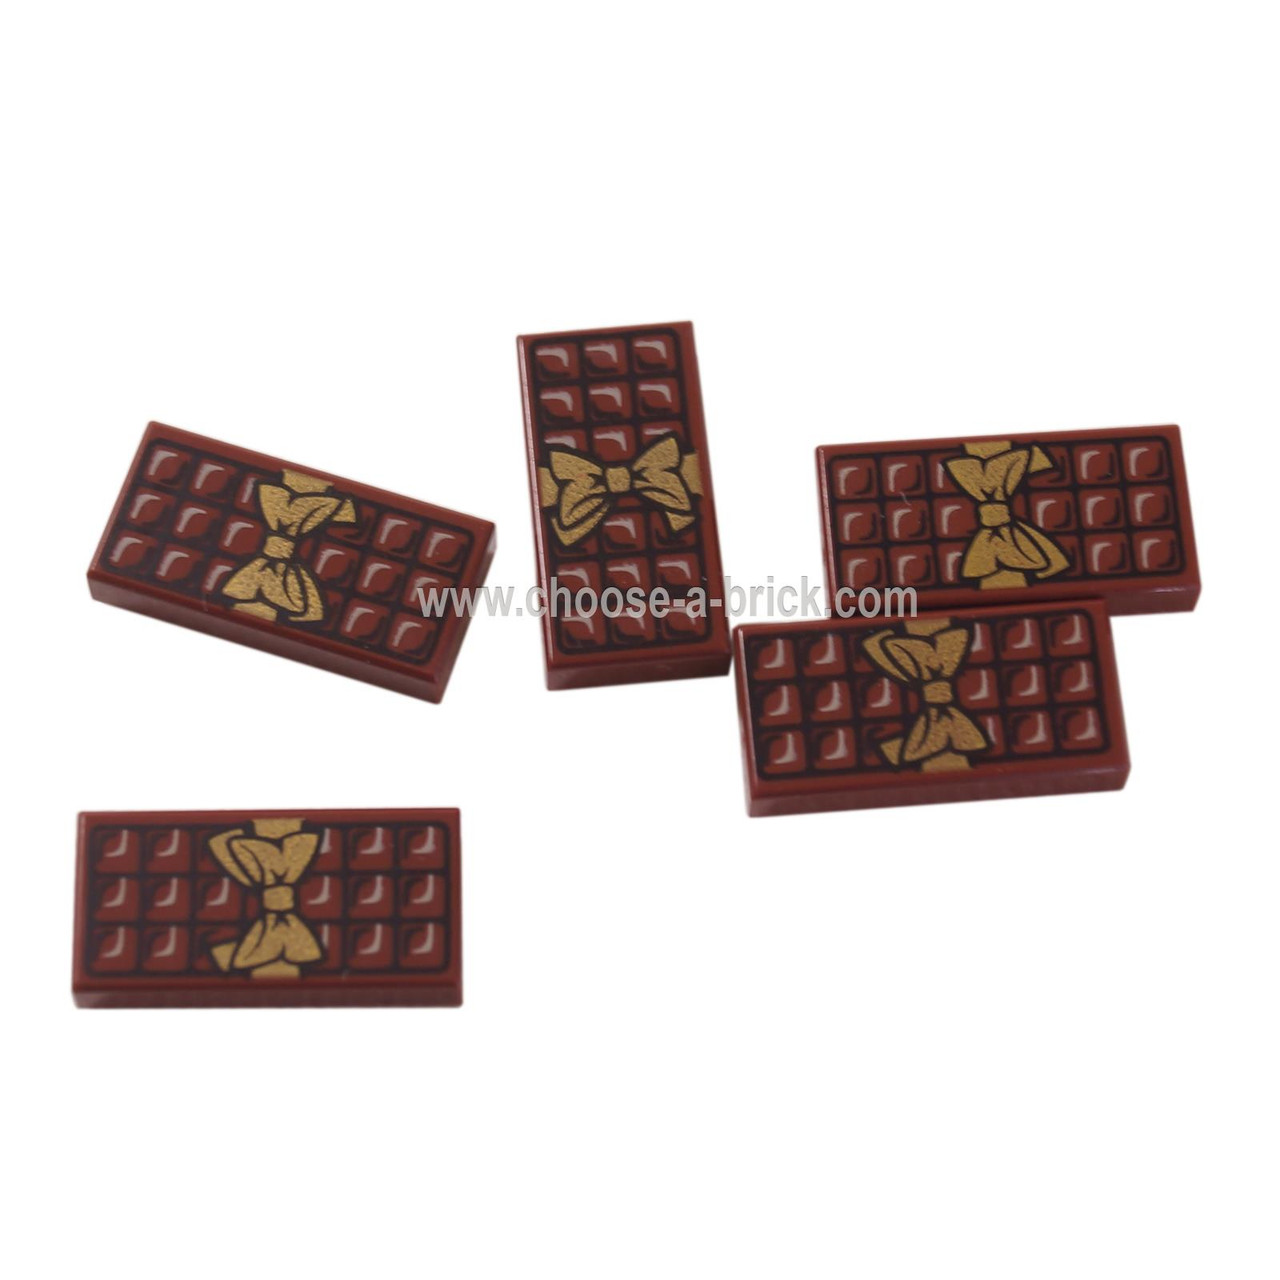 Lego X6 New Reddish Brown 1x2 Tile W/ Chocolate Bar Pattern Mini Figures Food